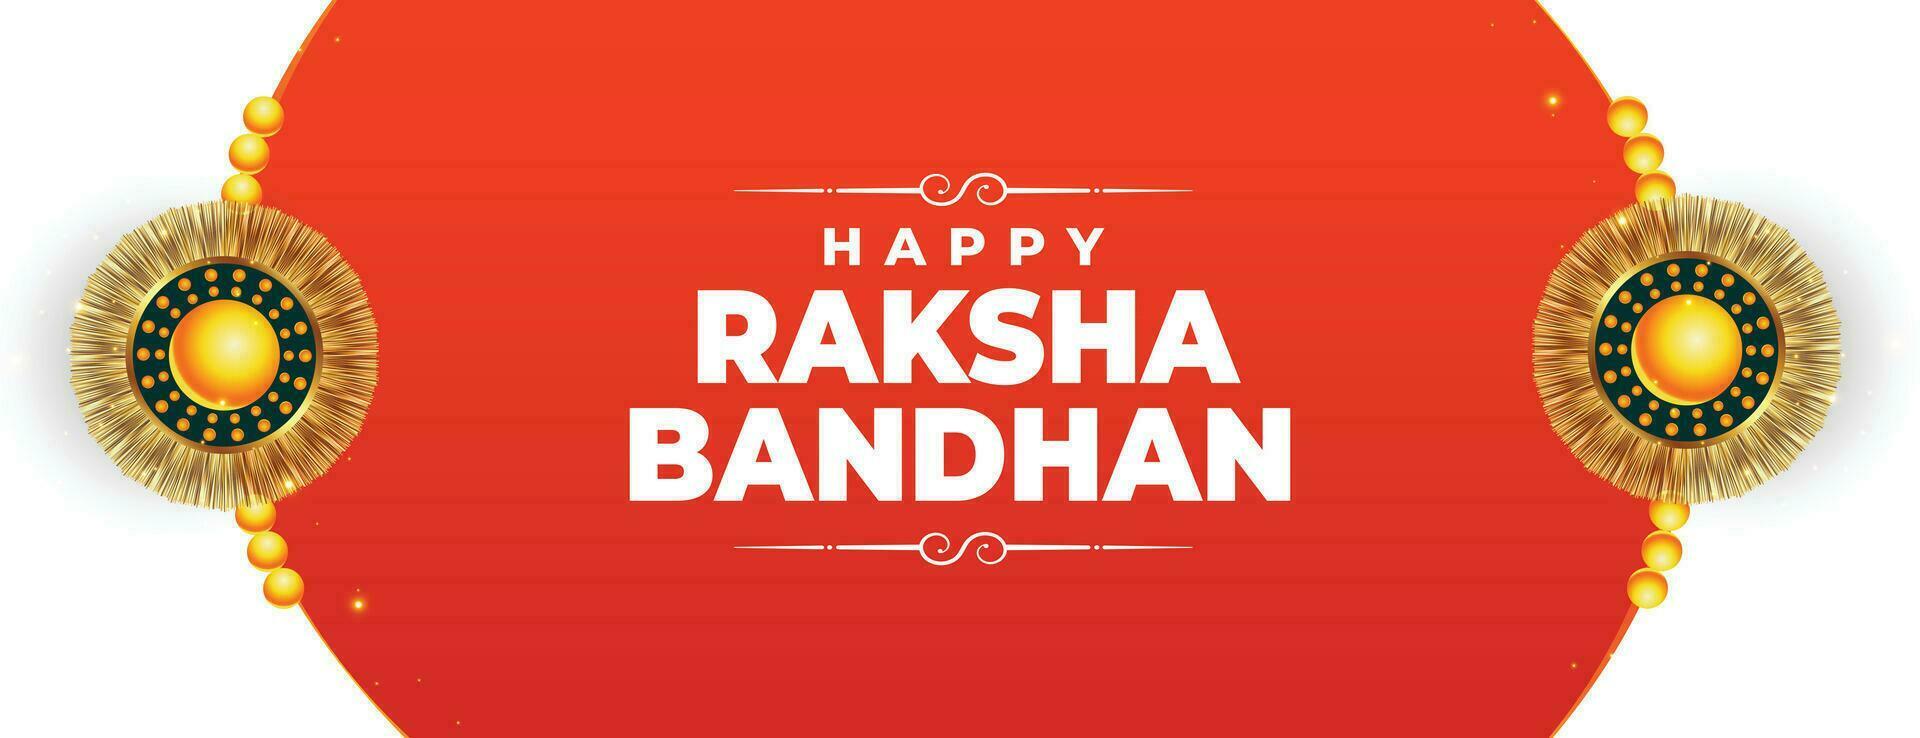 glücklich Raksha Bandhan Festival Banner mit Rakhi vektor